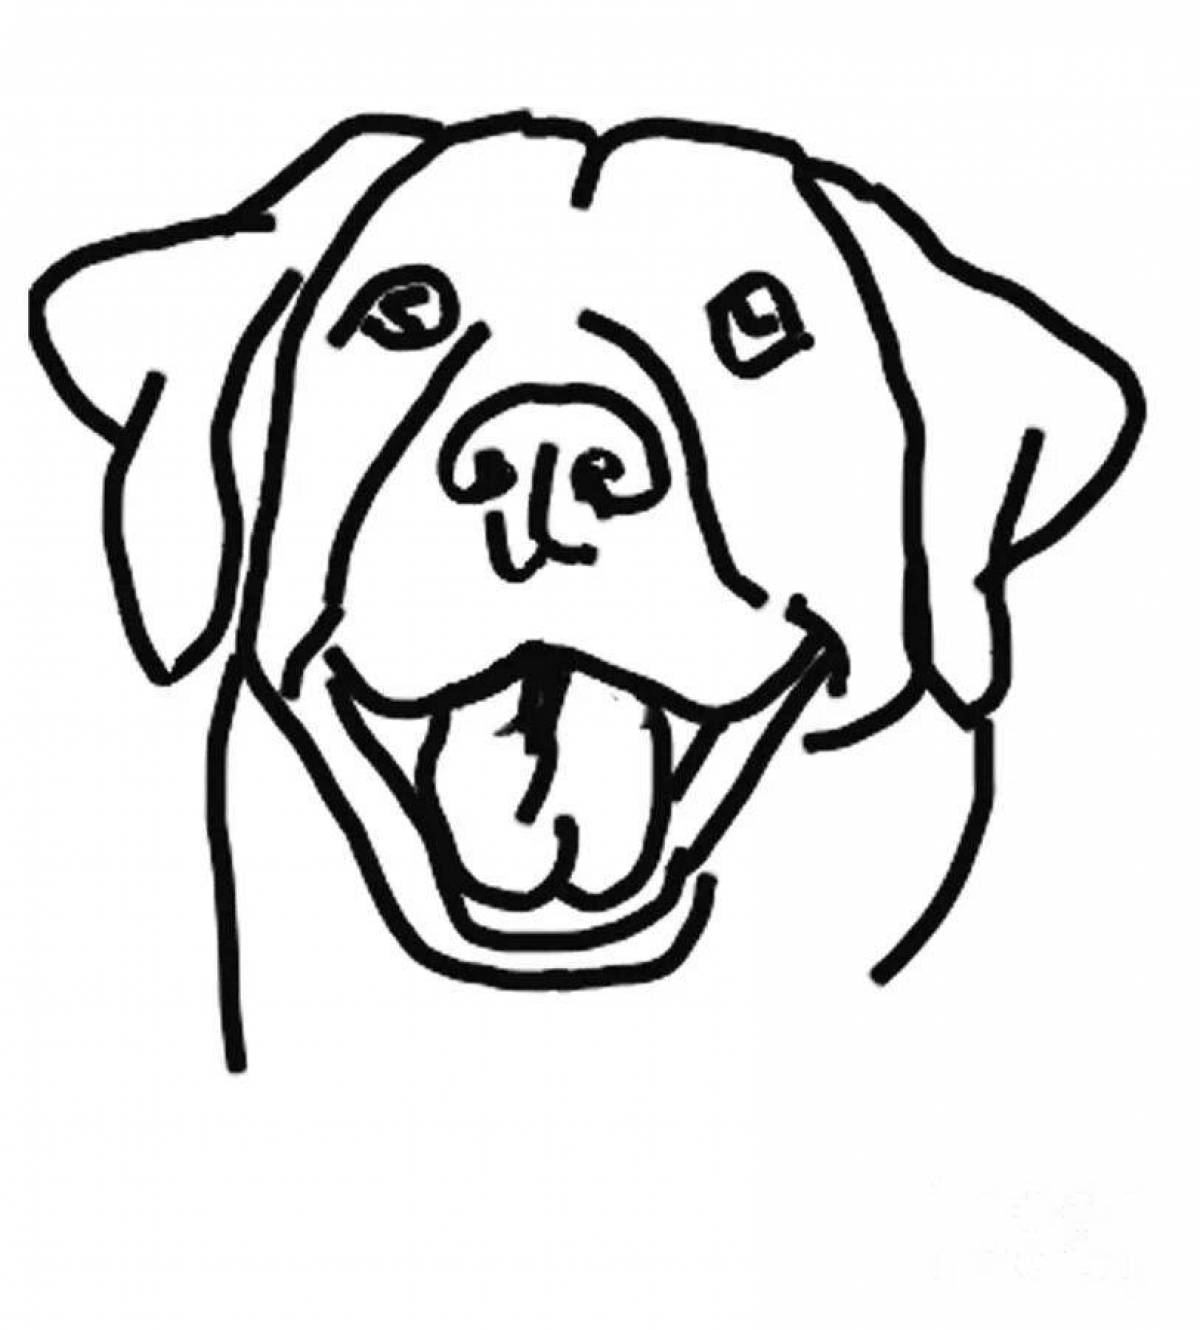 Coloring book shining dog face